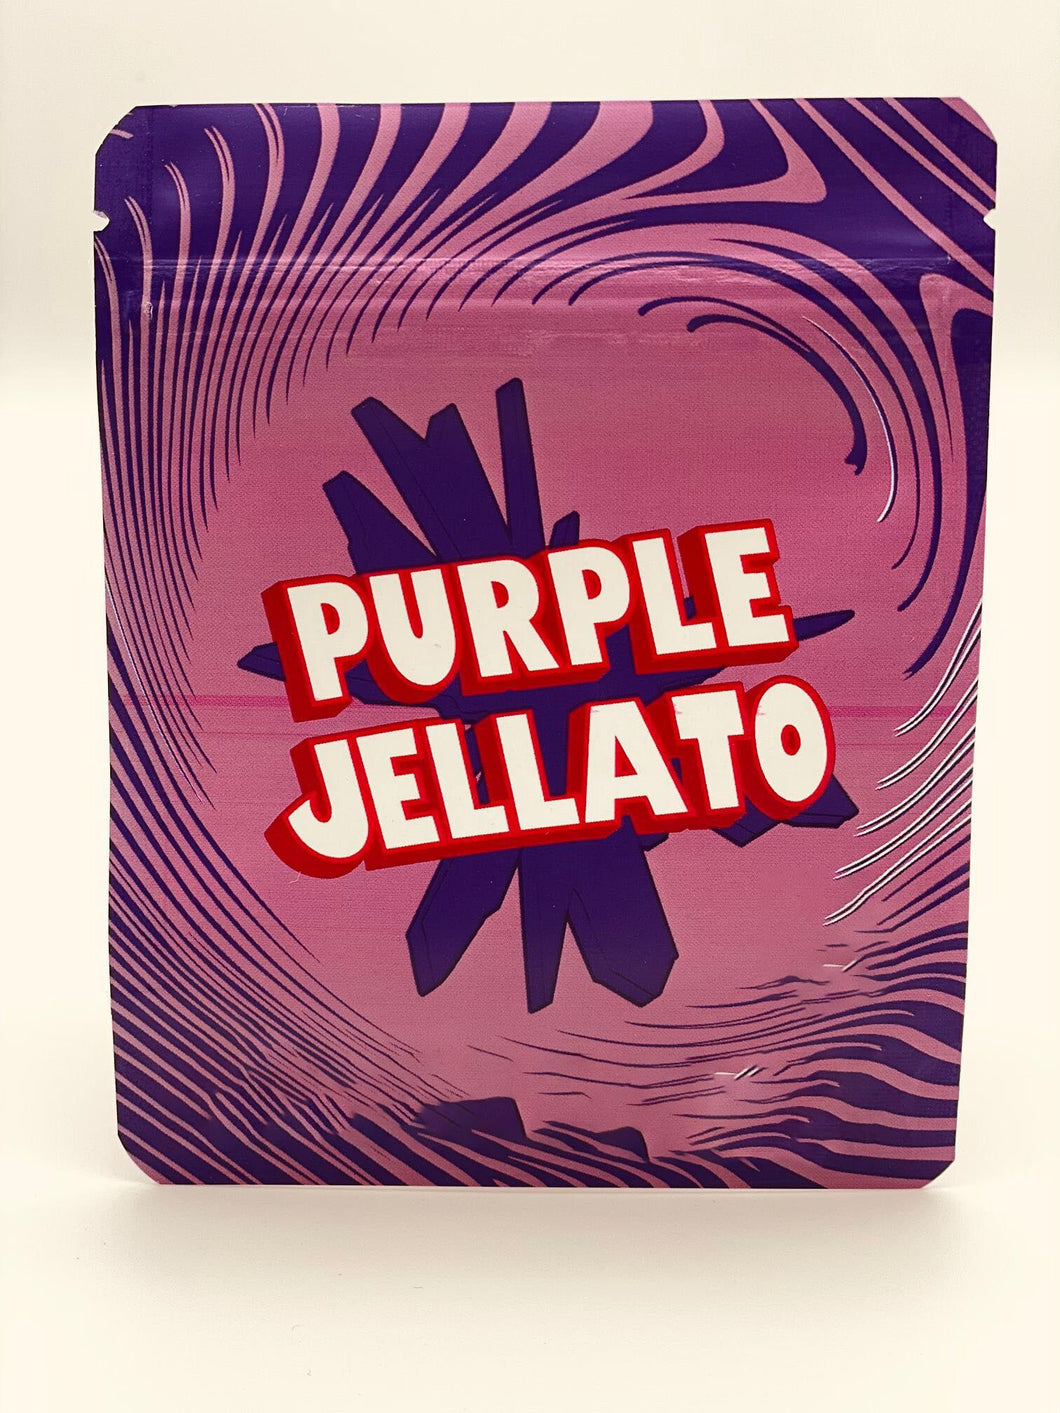 50 Purple Gellato 3.5 gram empty Mylar bags